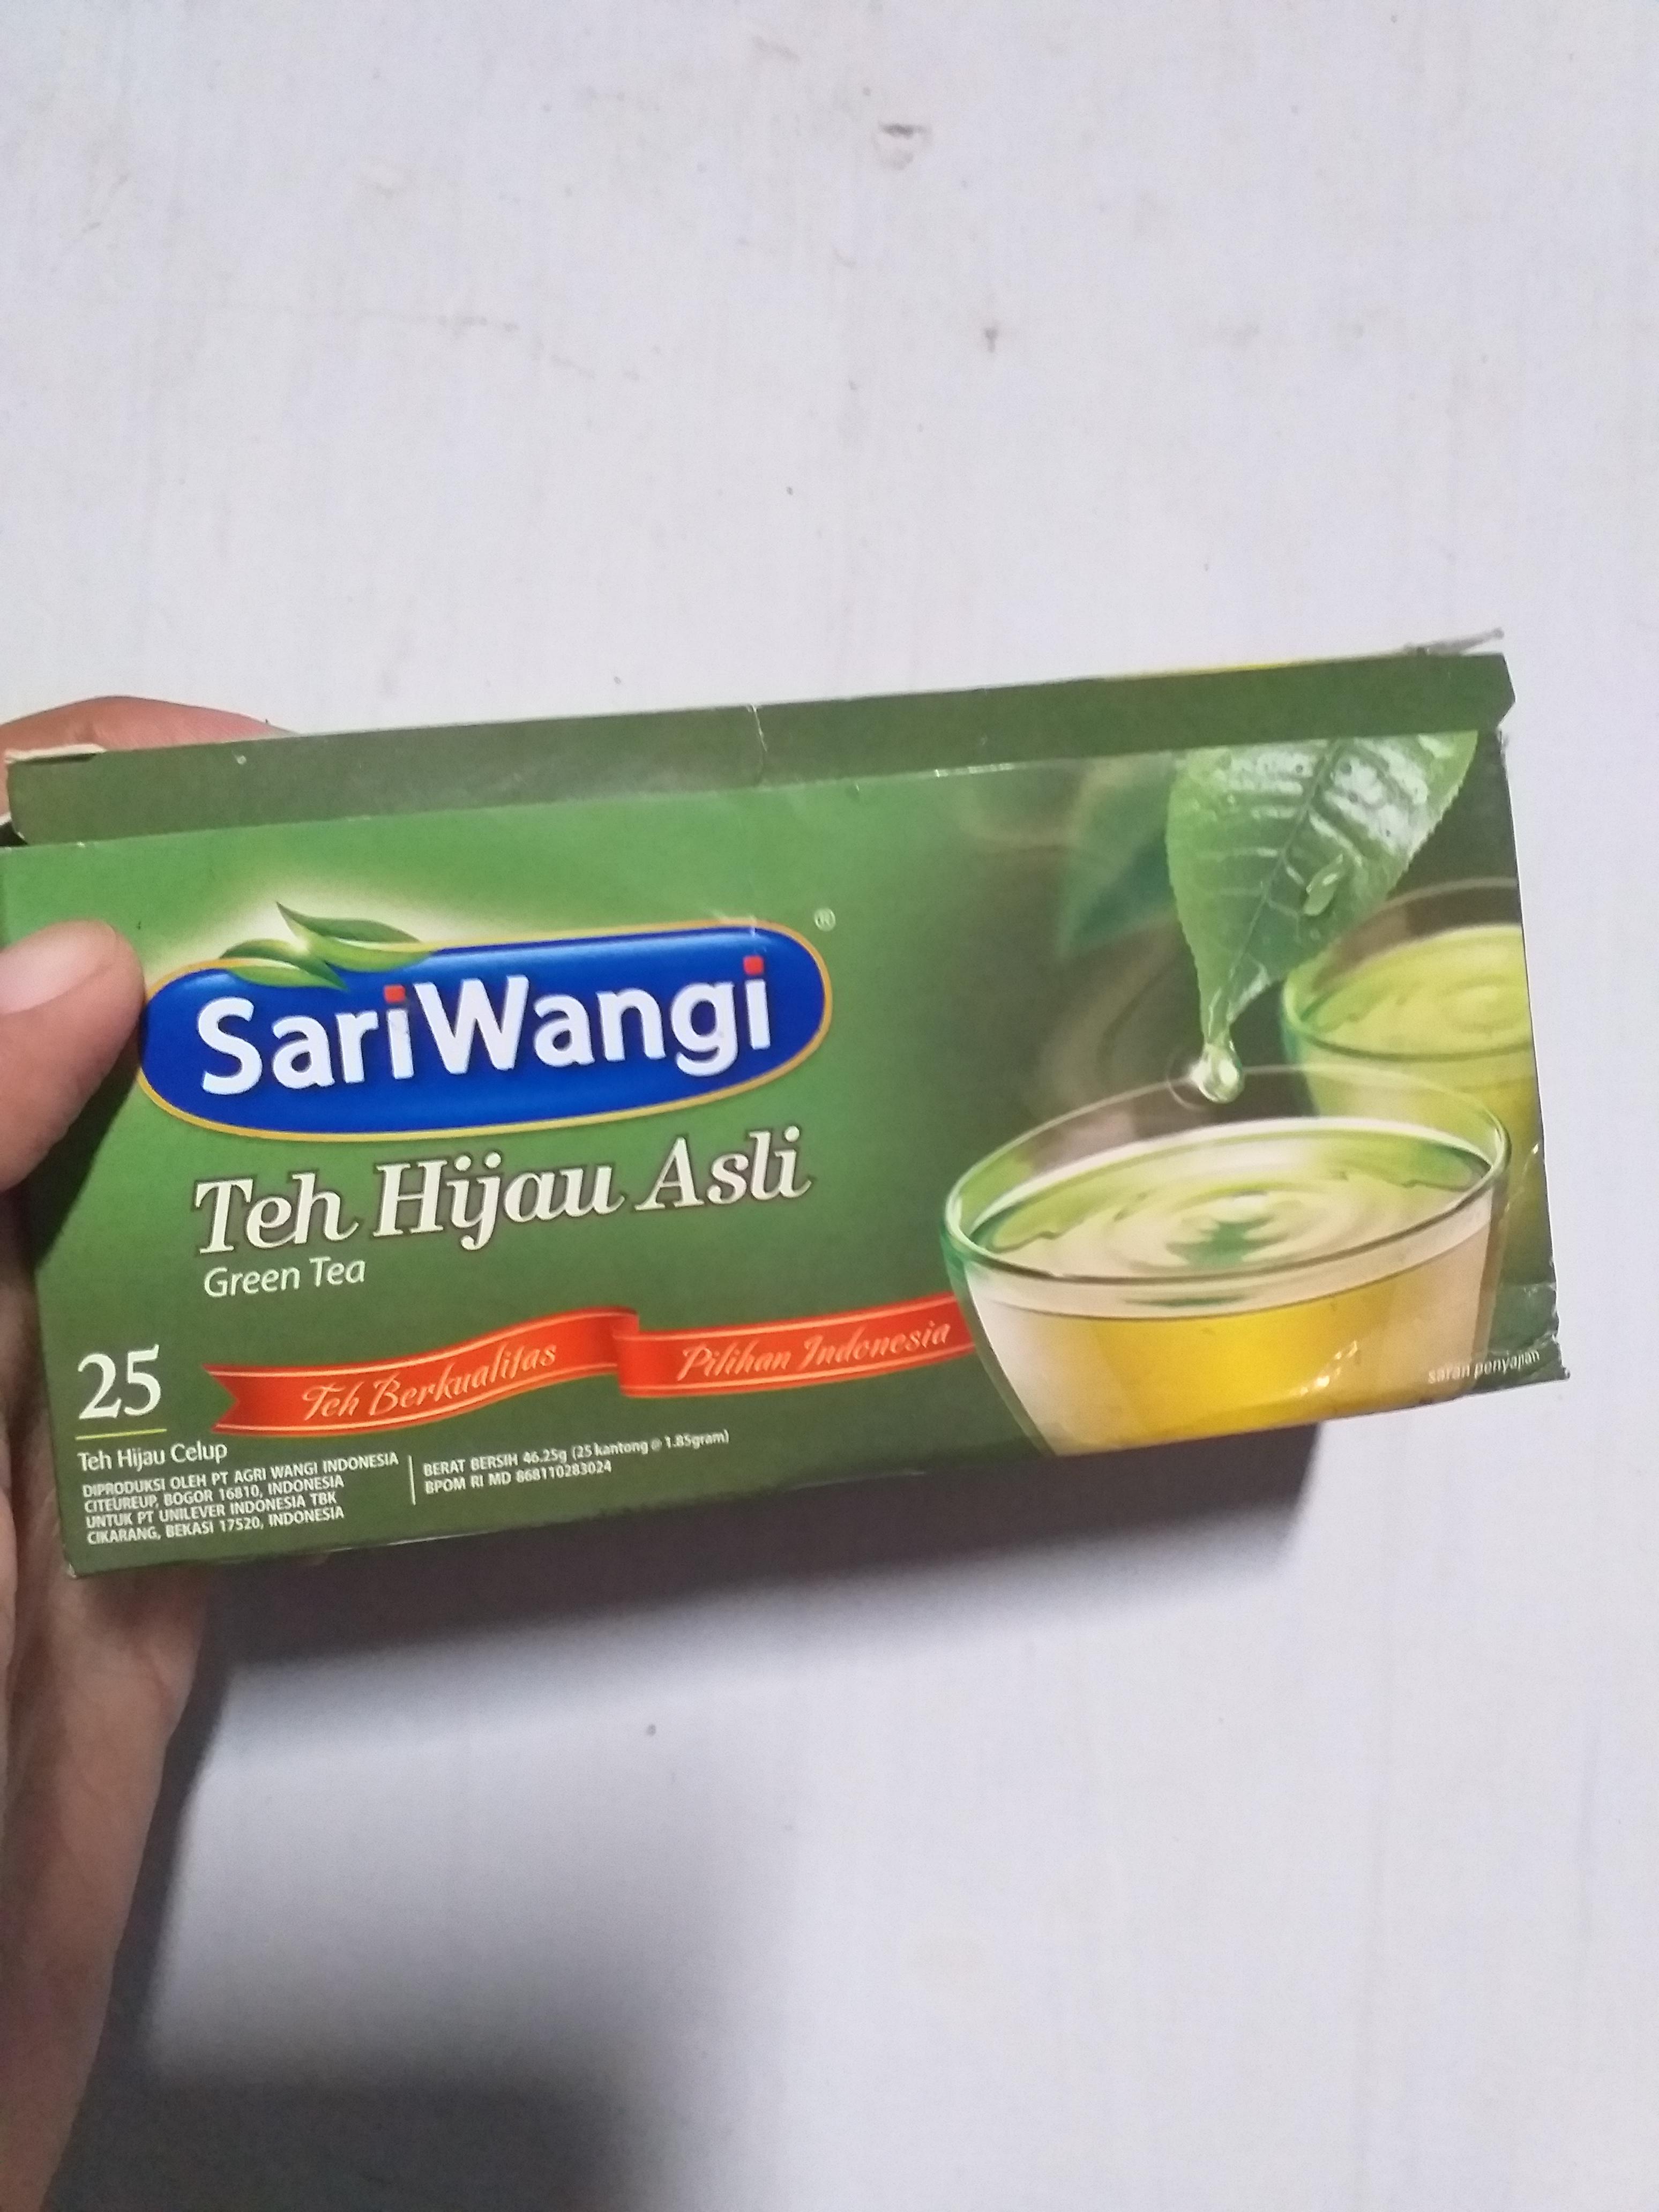 Teh hijau asli by Sari wangi review Minuman & alkohol